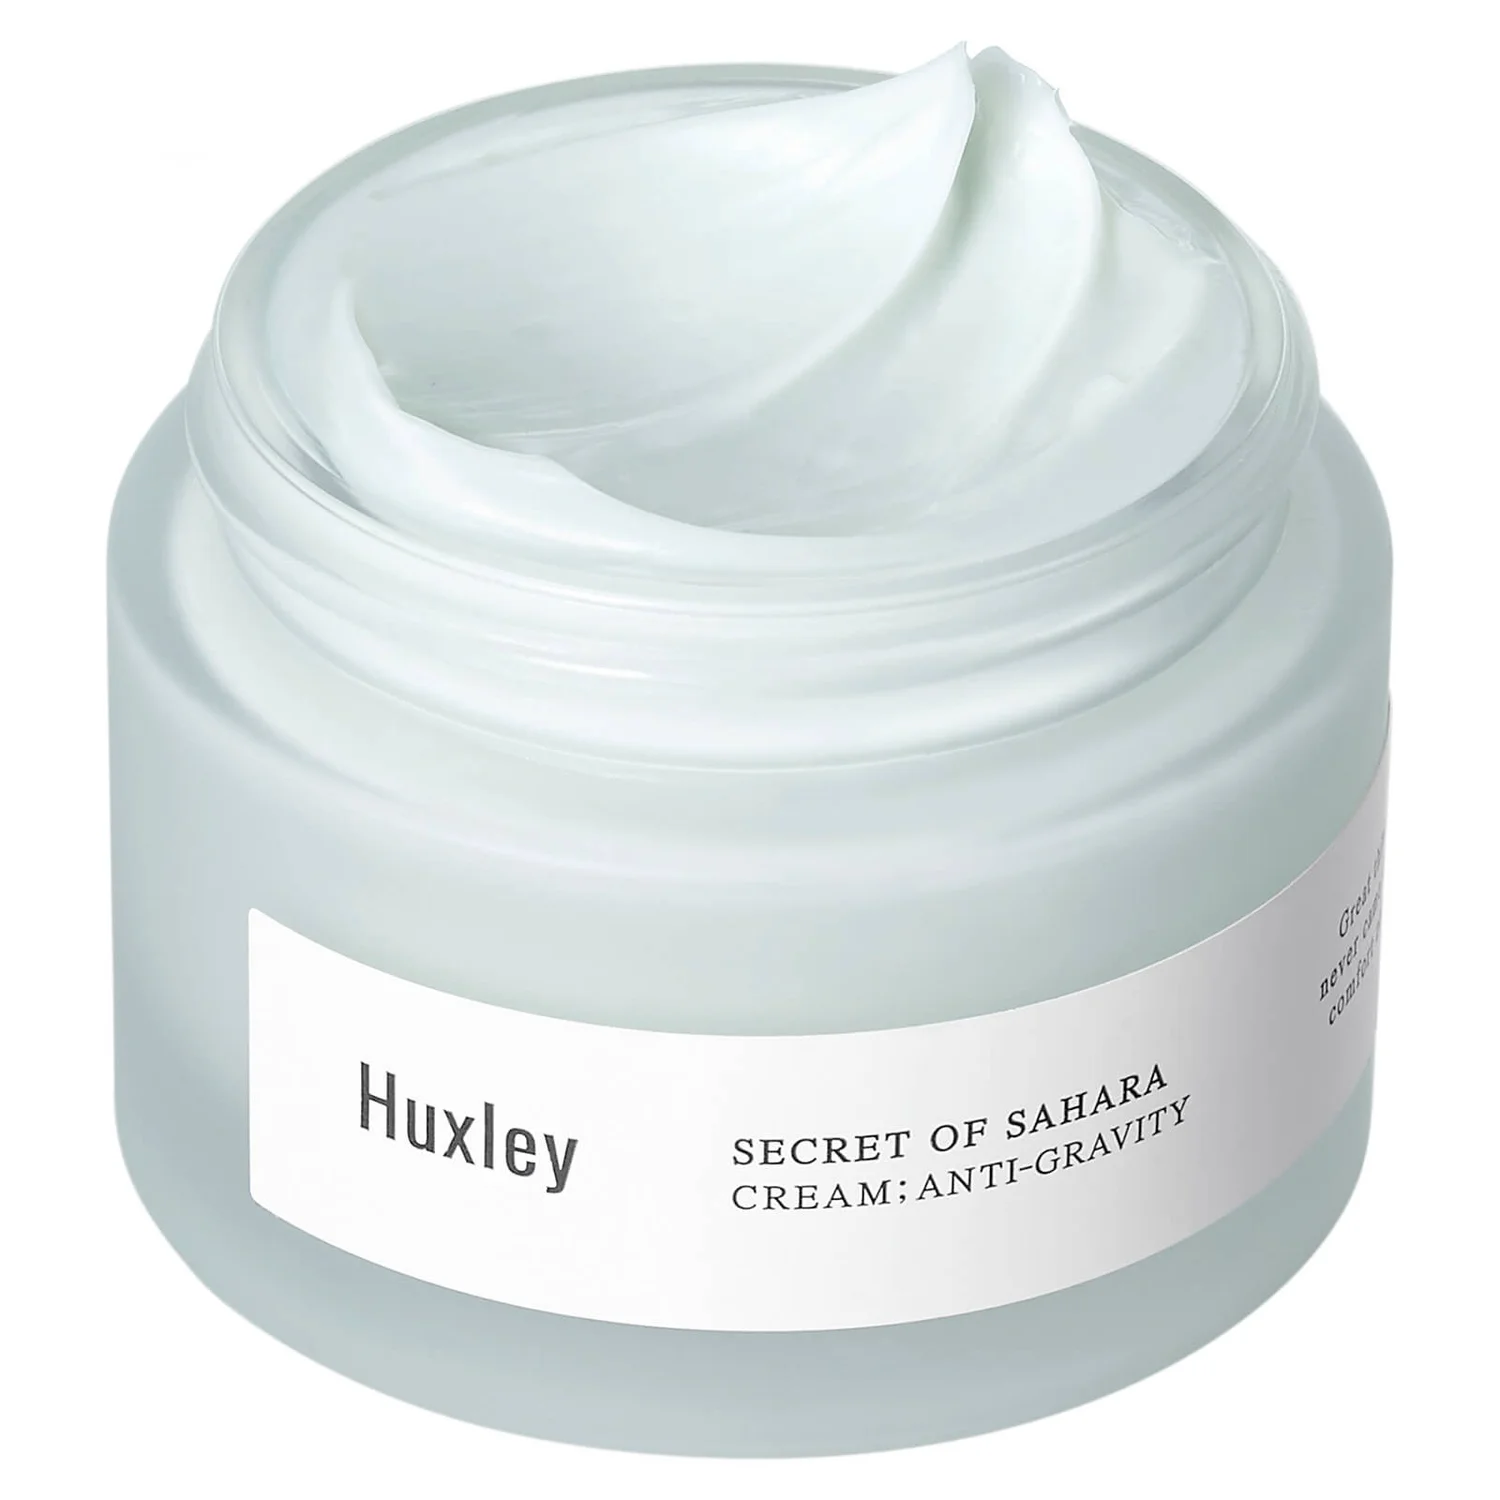 Huxley Anti-Gravity Cream 50ml
